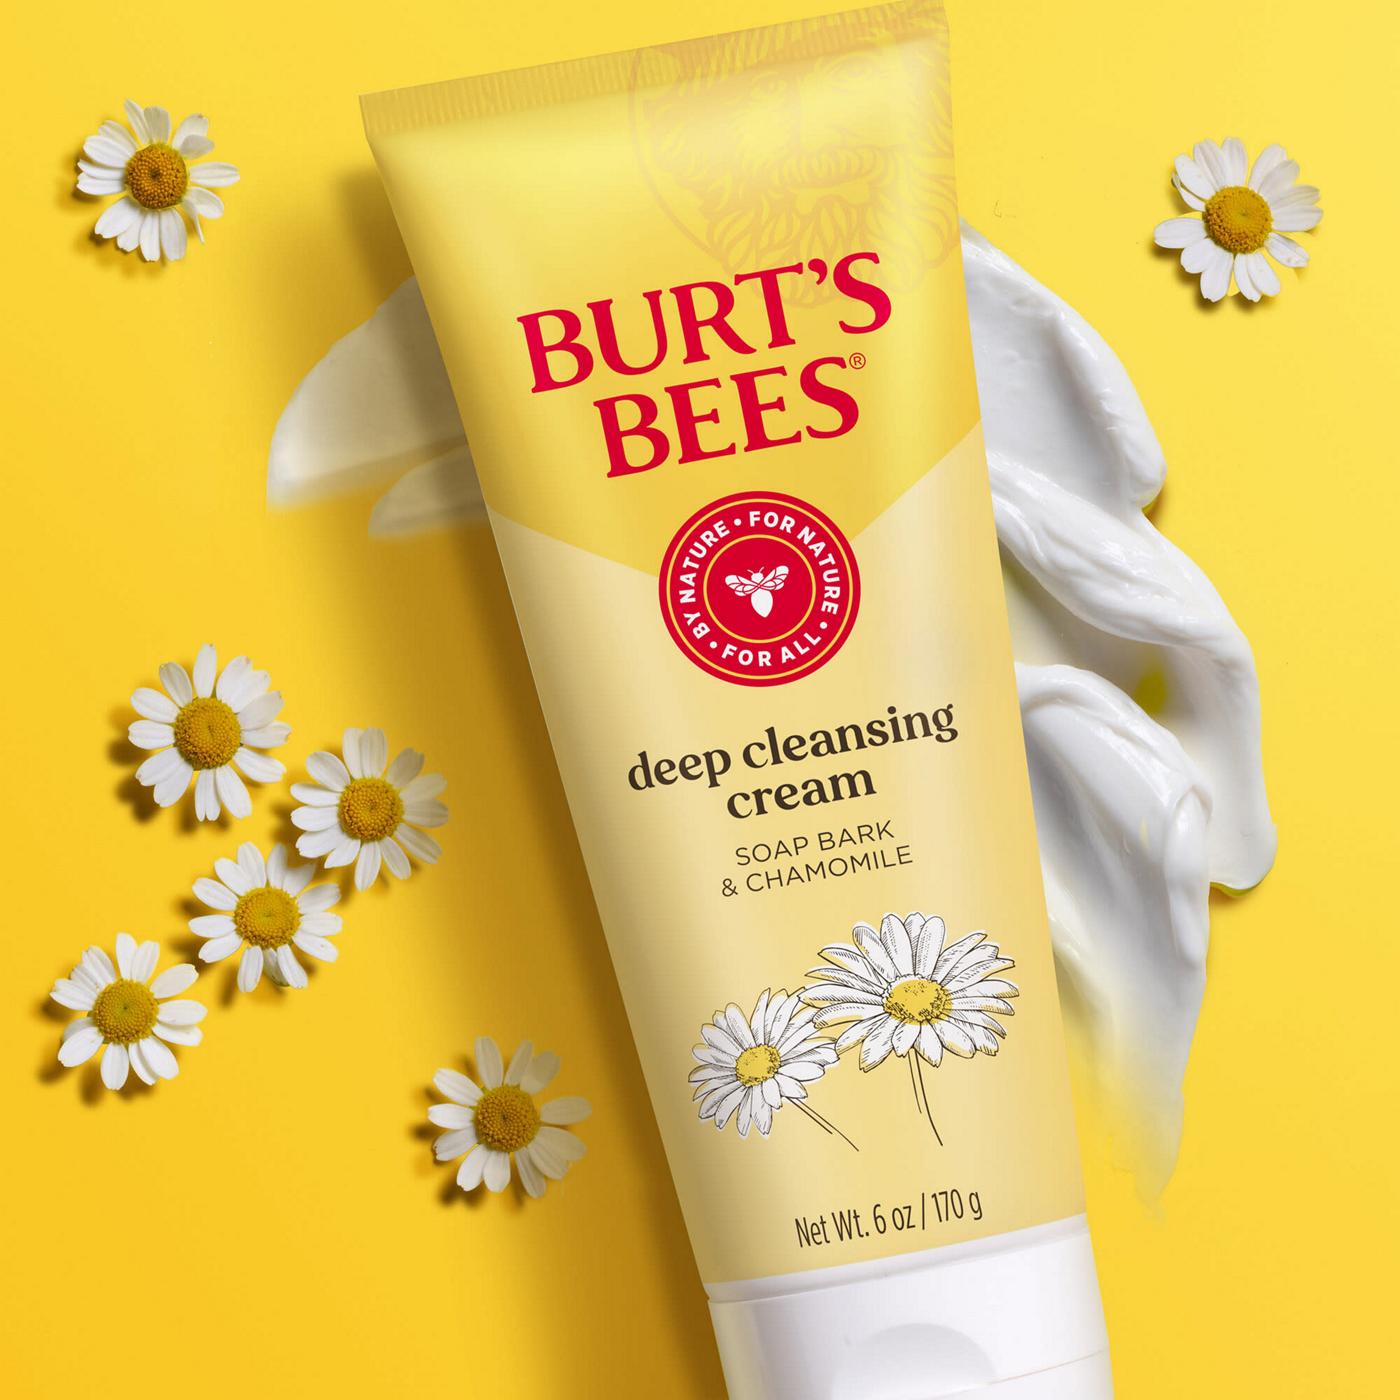 Burt's Bees Deep Cleansing Cream - Soap Bark & Chamomile; image 13 of 13